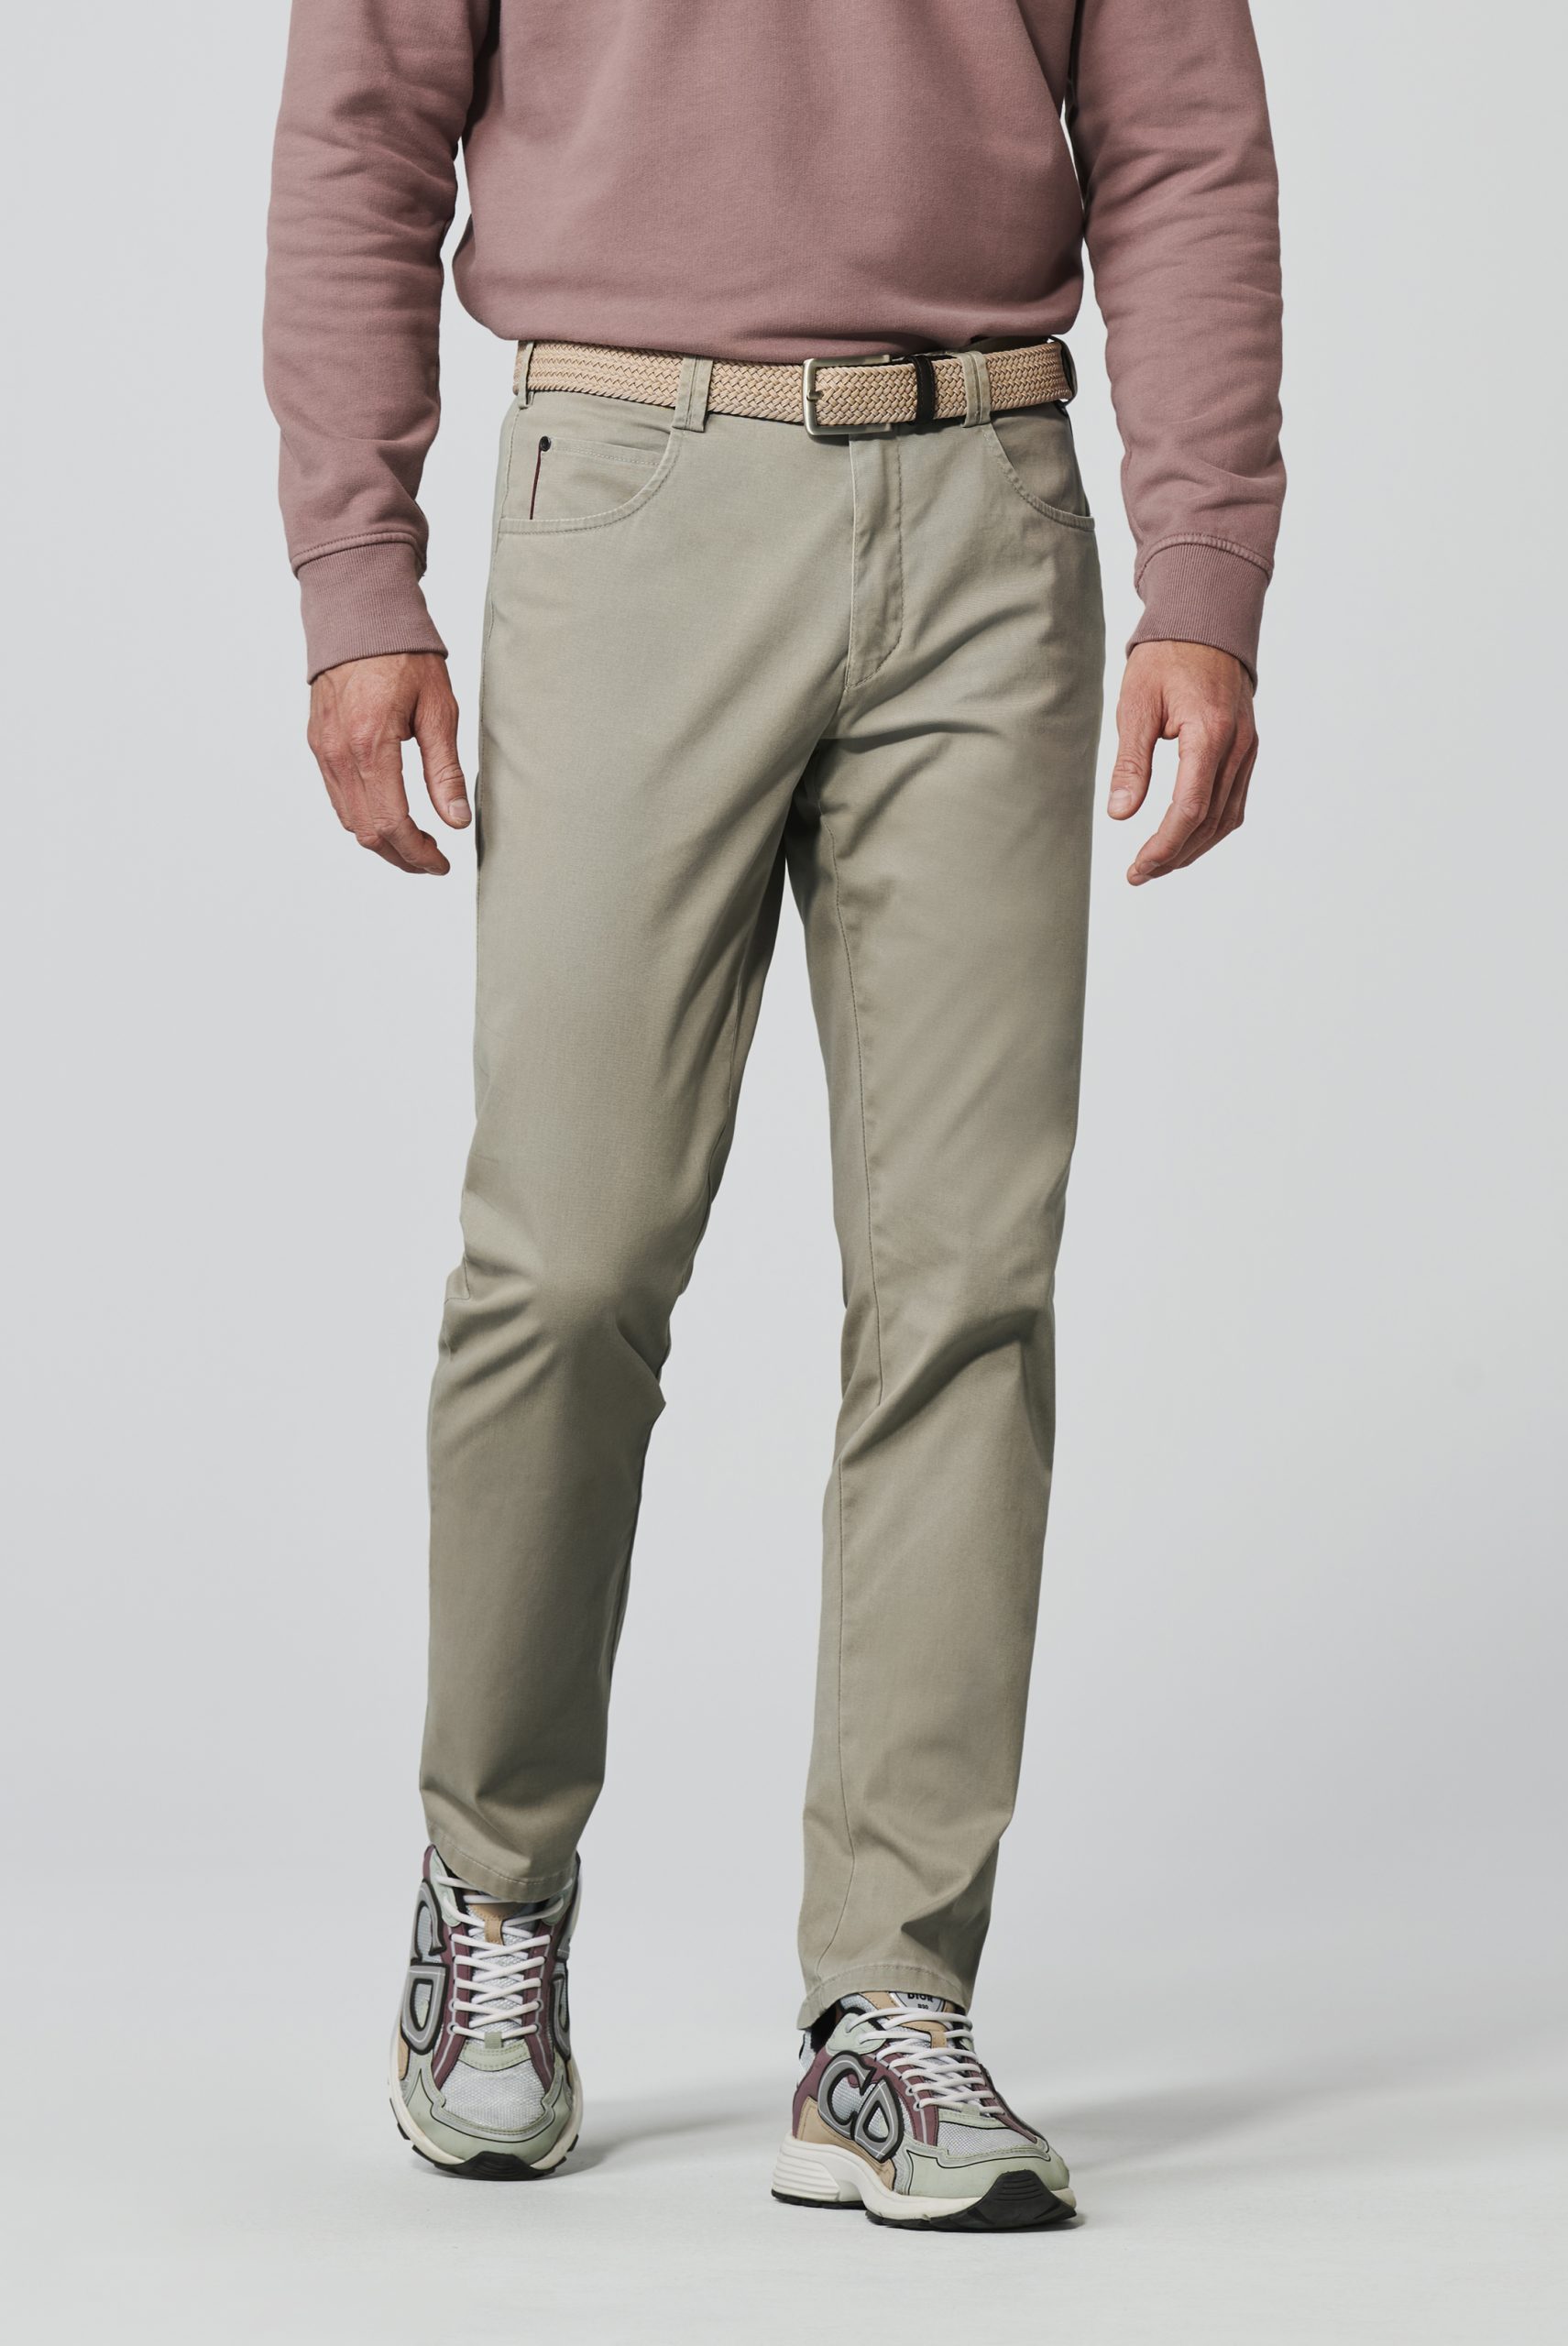 Kwik Bijna Eigendom Meyer Pantalon | 5054-33 Diego - De Man Mode & Jeans